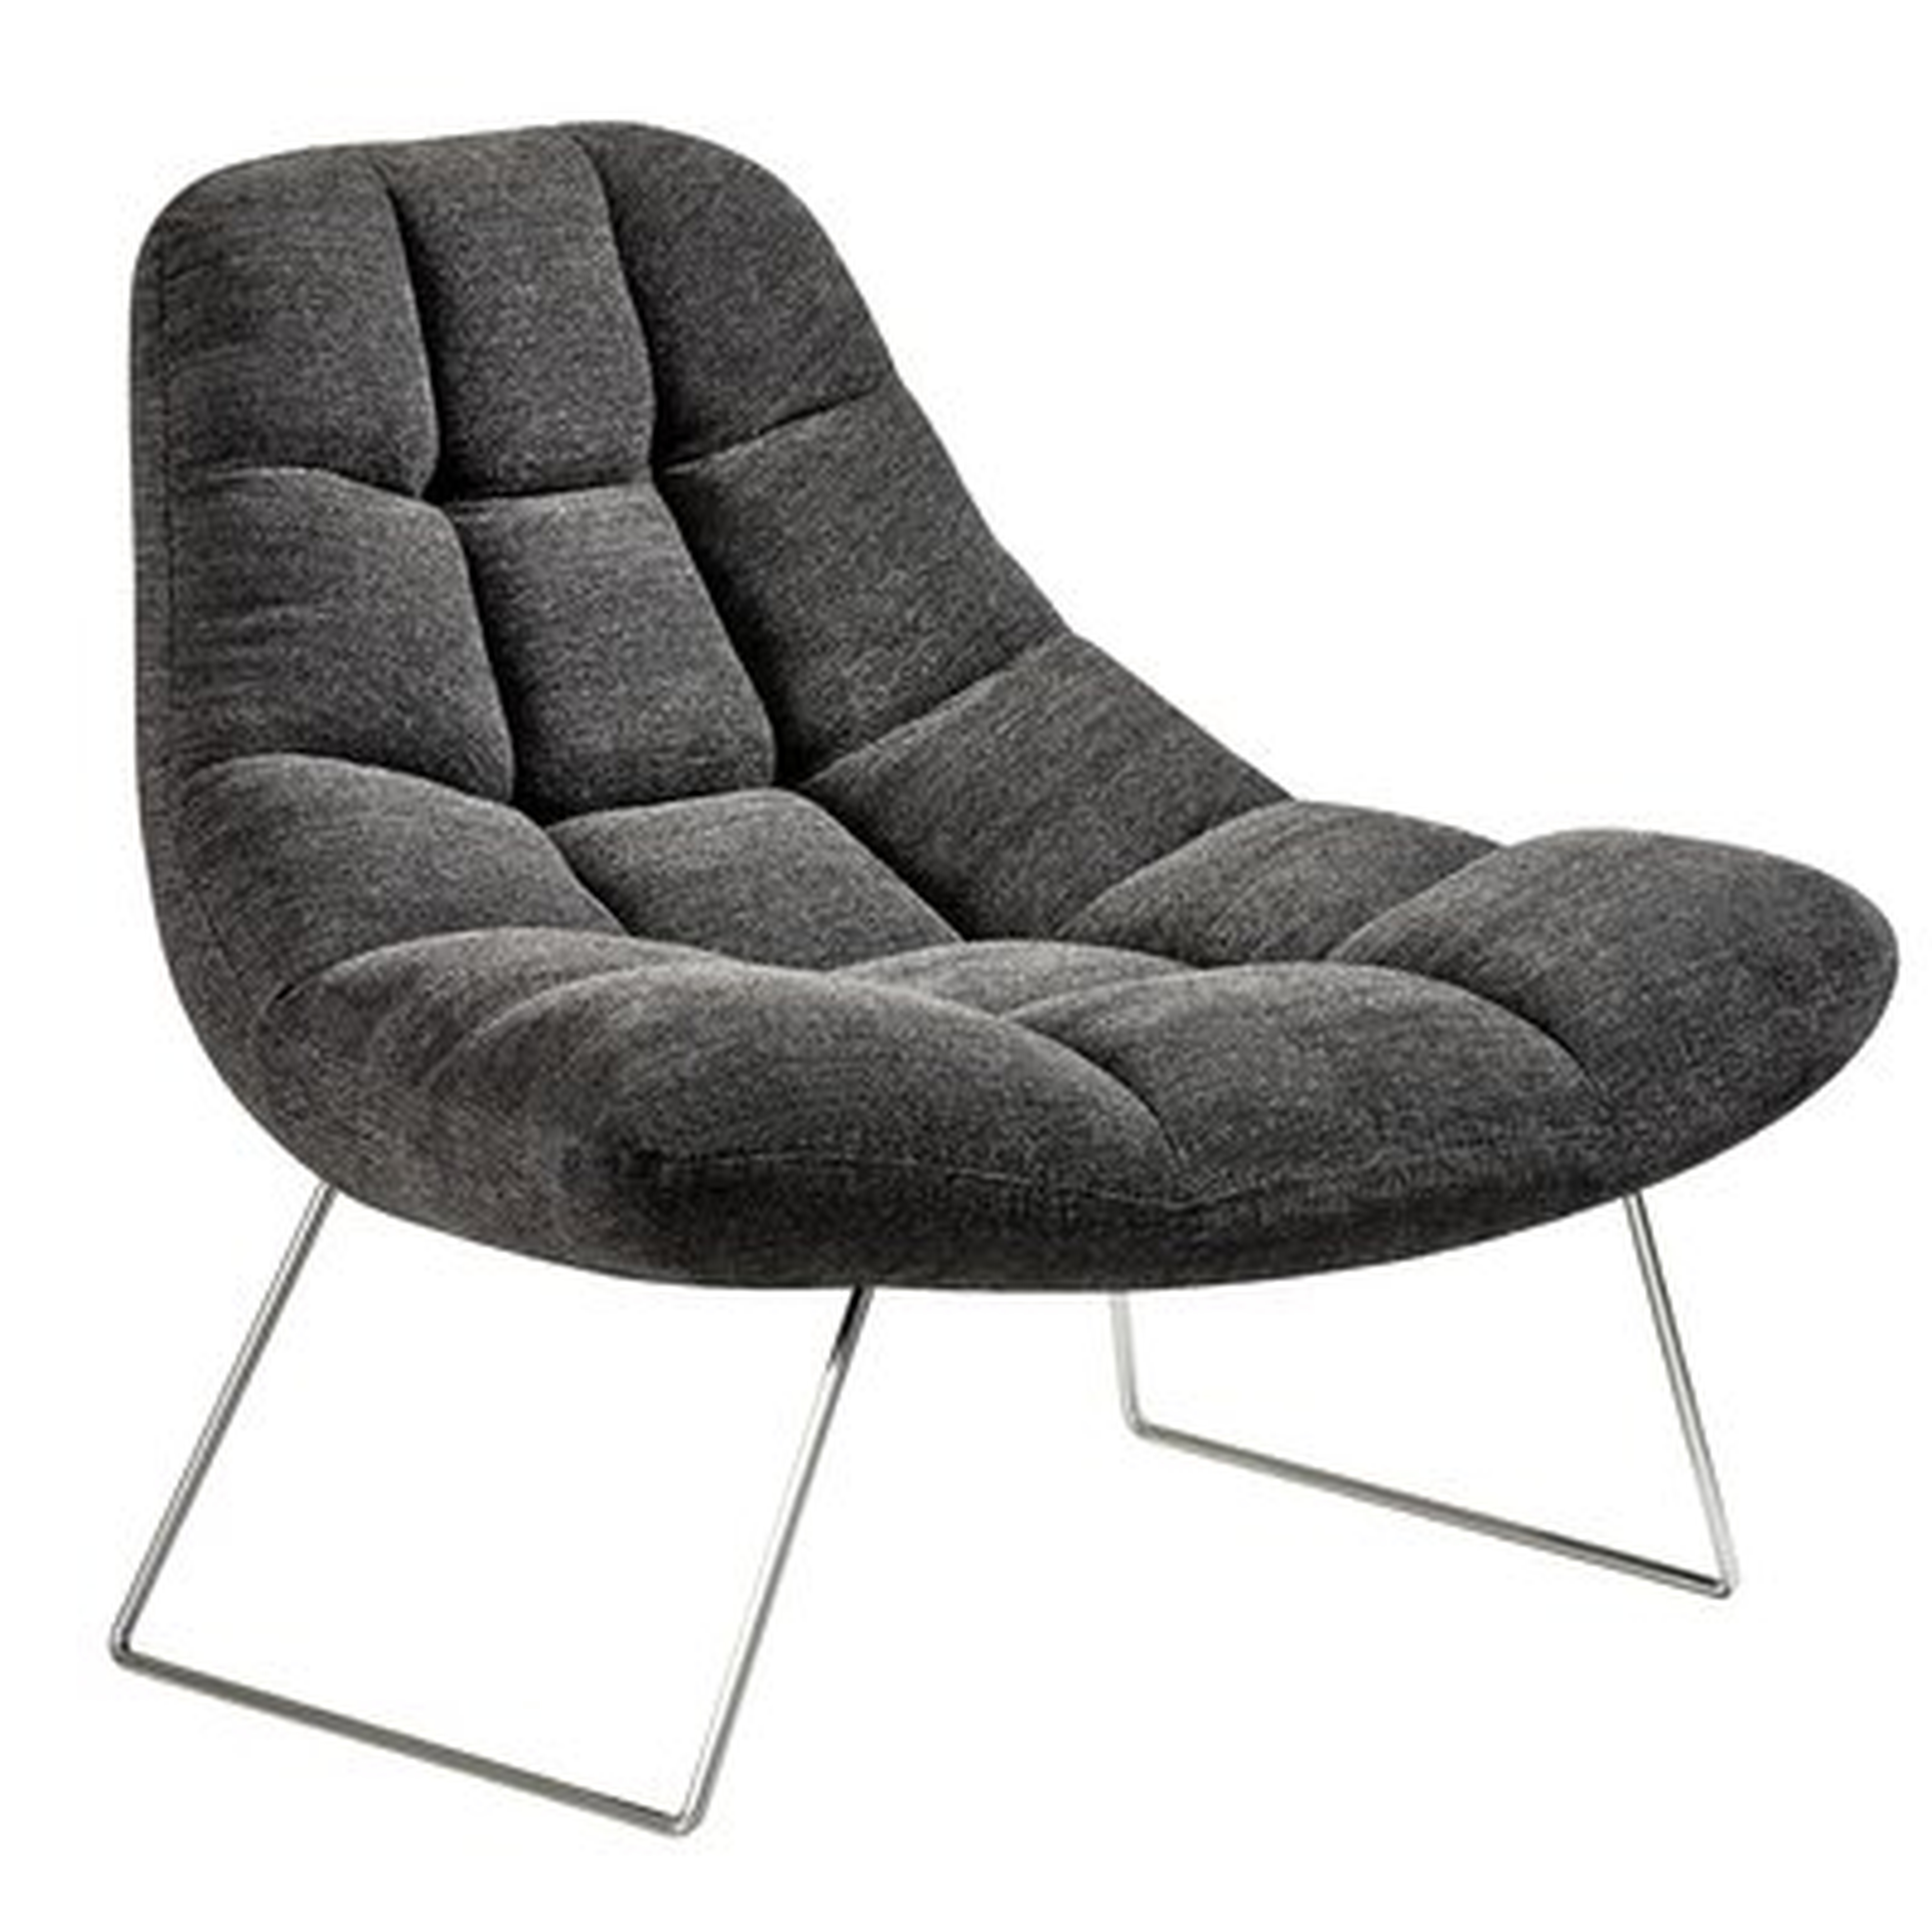 Americus Lounge Chair - Wayfair